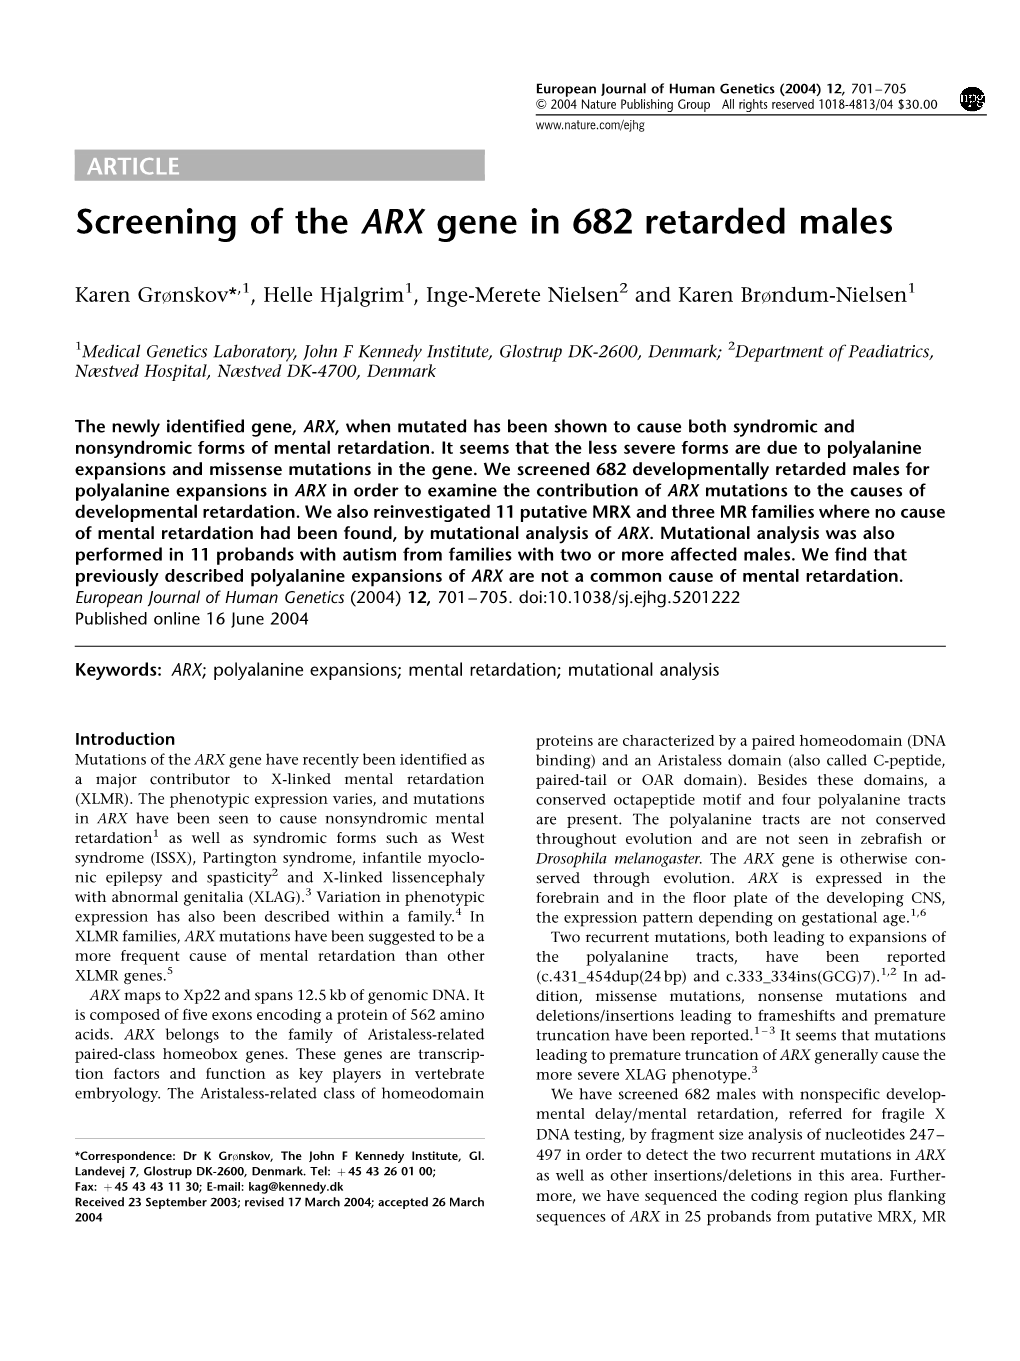 Screening of the ARX Gene in 682 Retarded Males